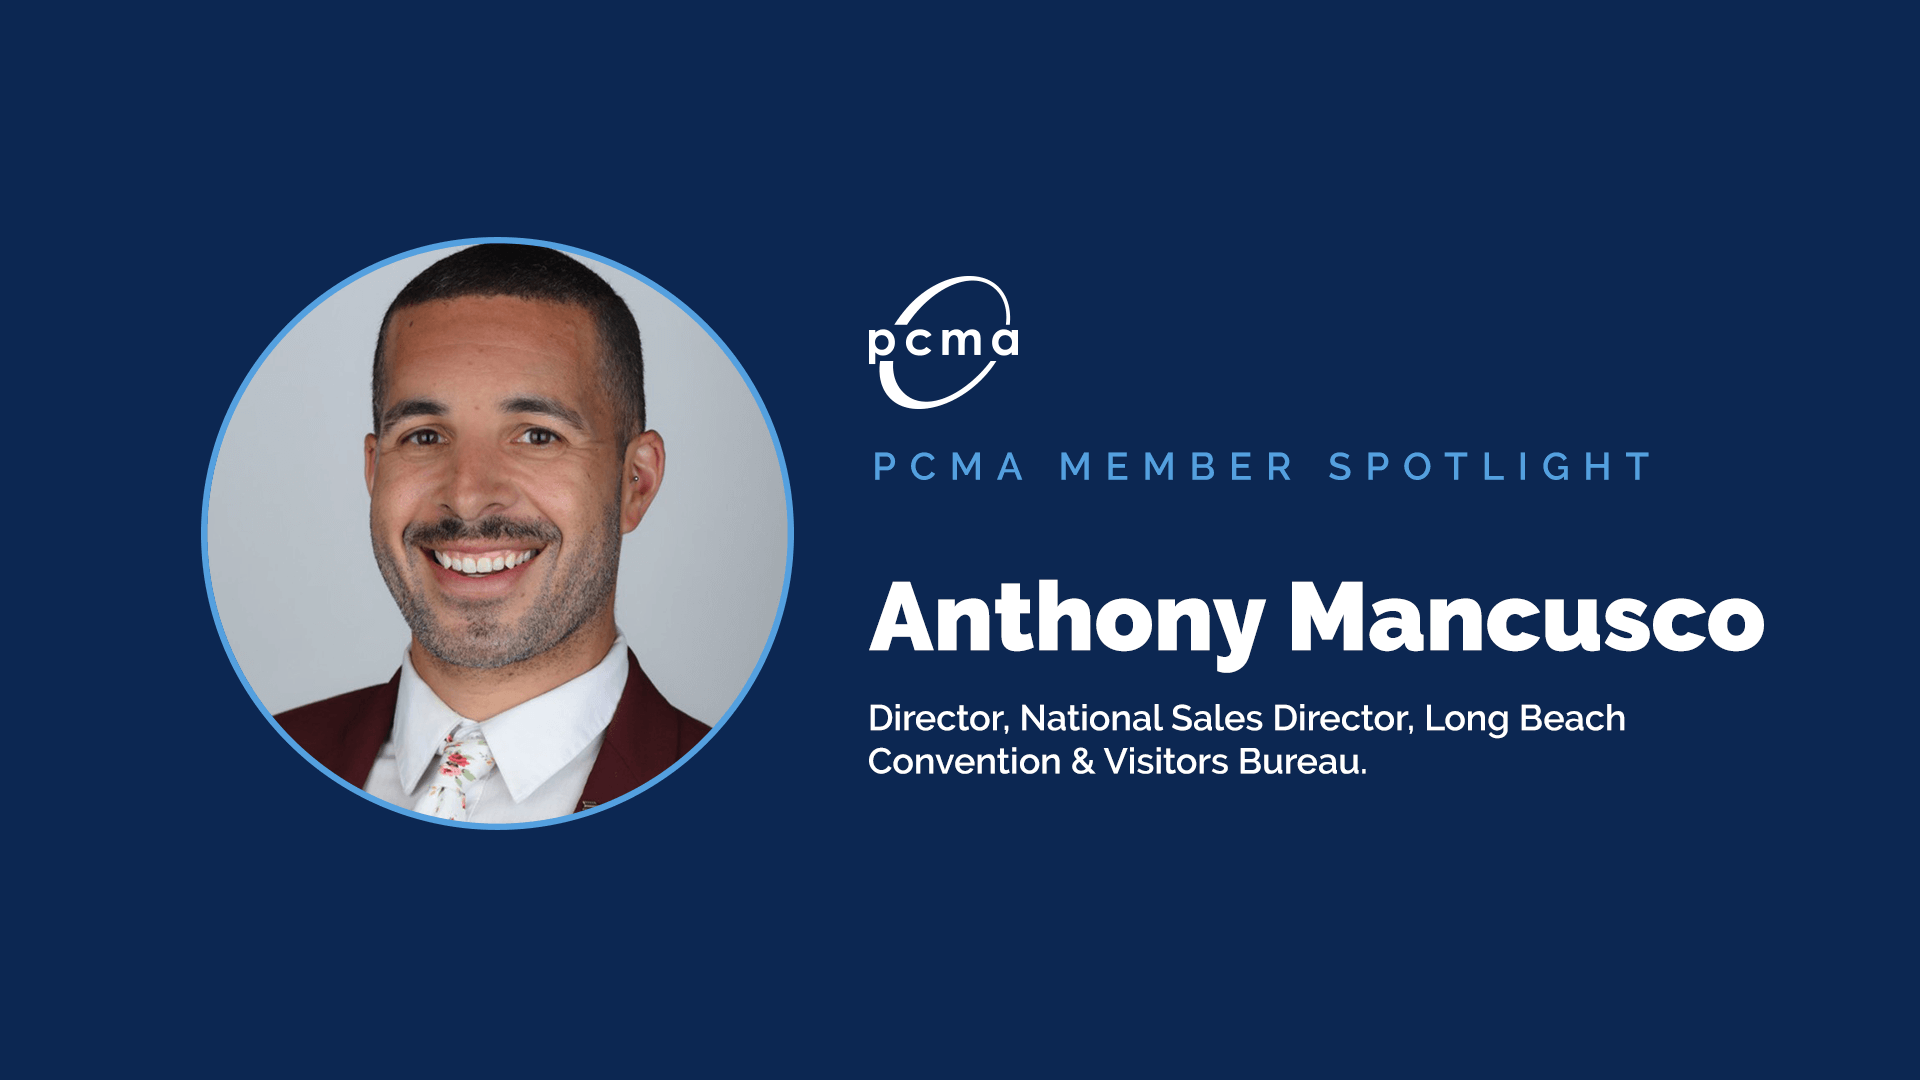 Anthony Mancusco PCMA Member Spotlight